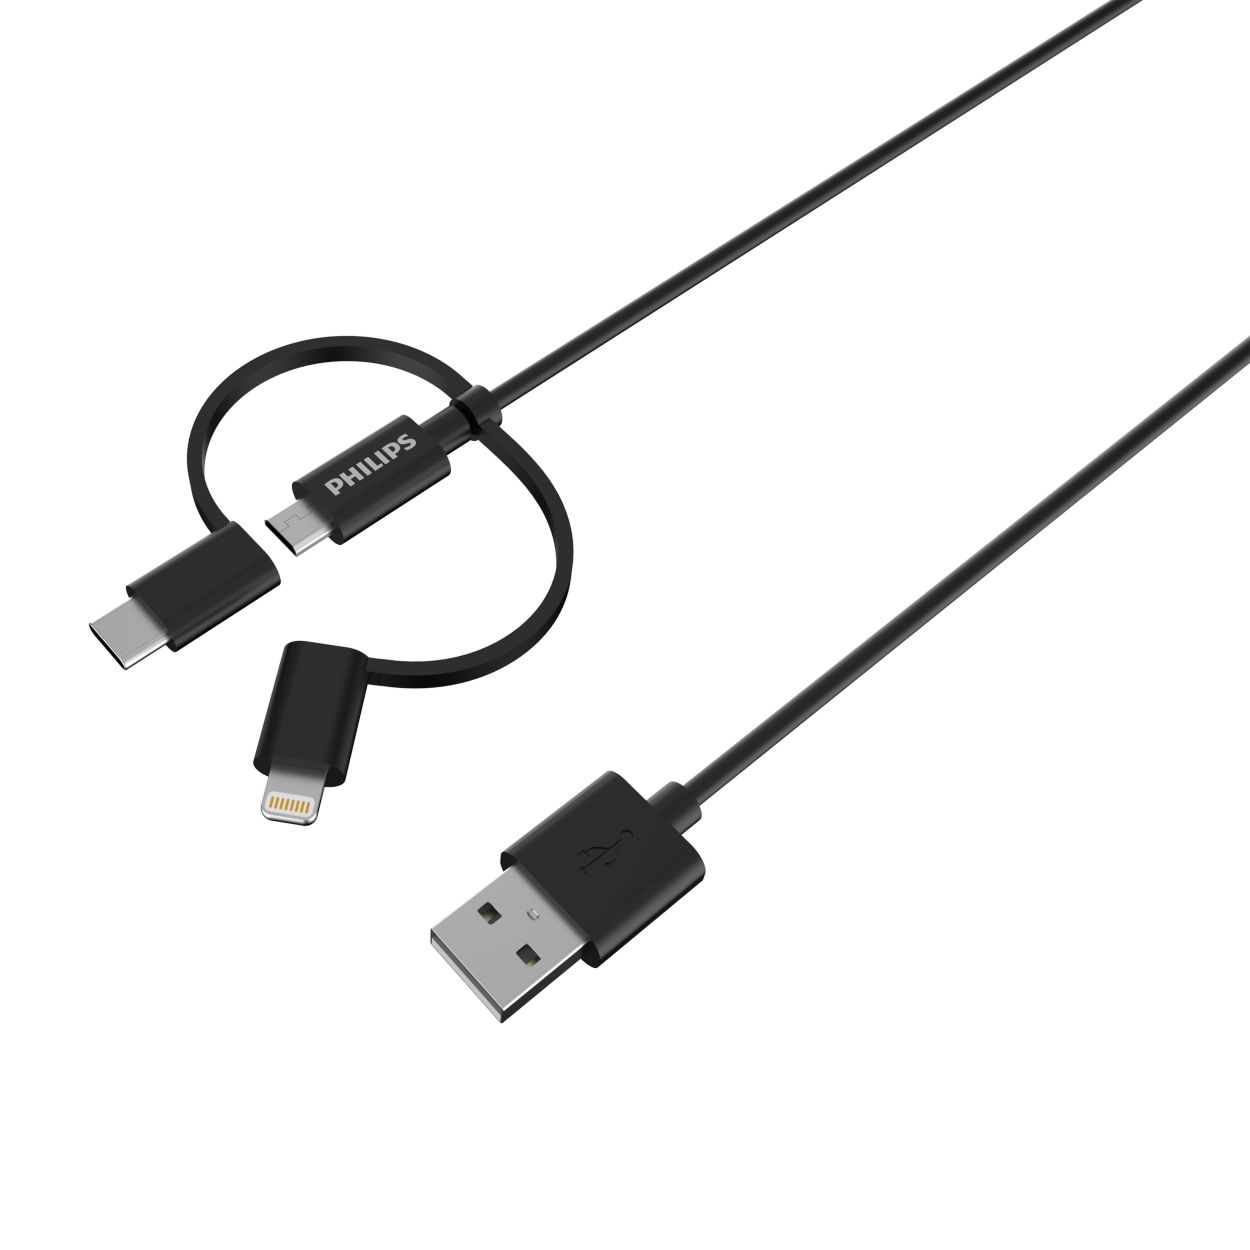 cable:Lightning, USB-C, Micro USB DLC3106T/00 | Philips